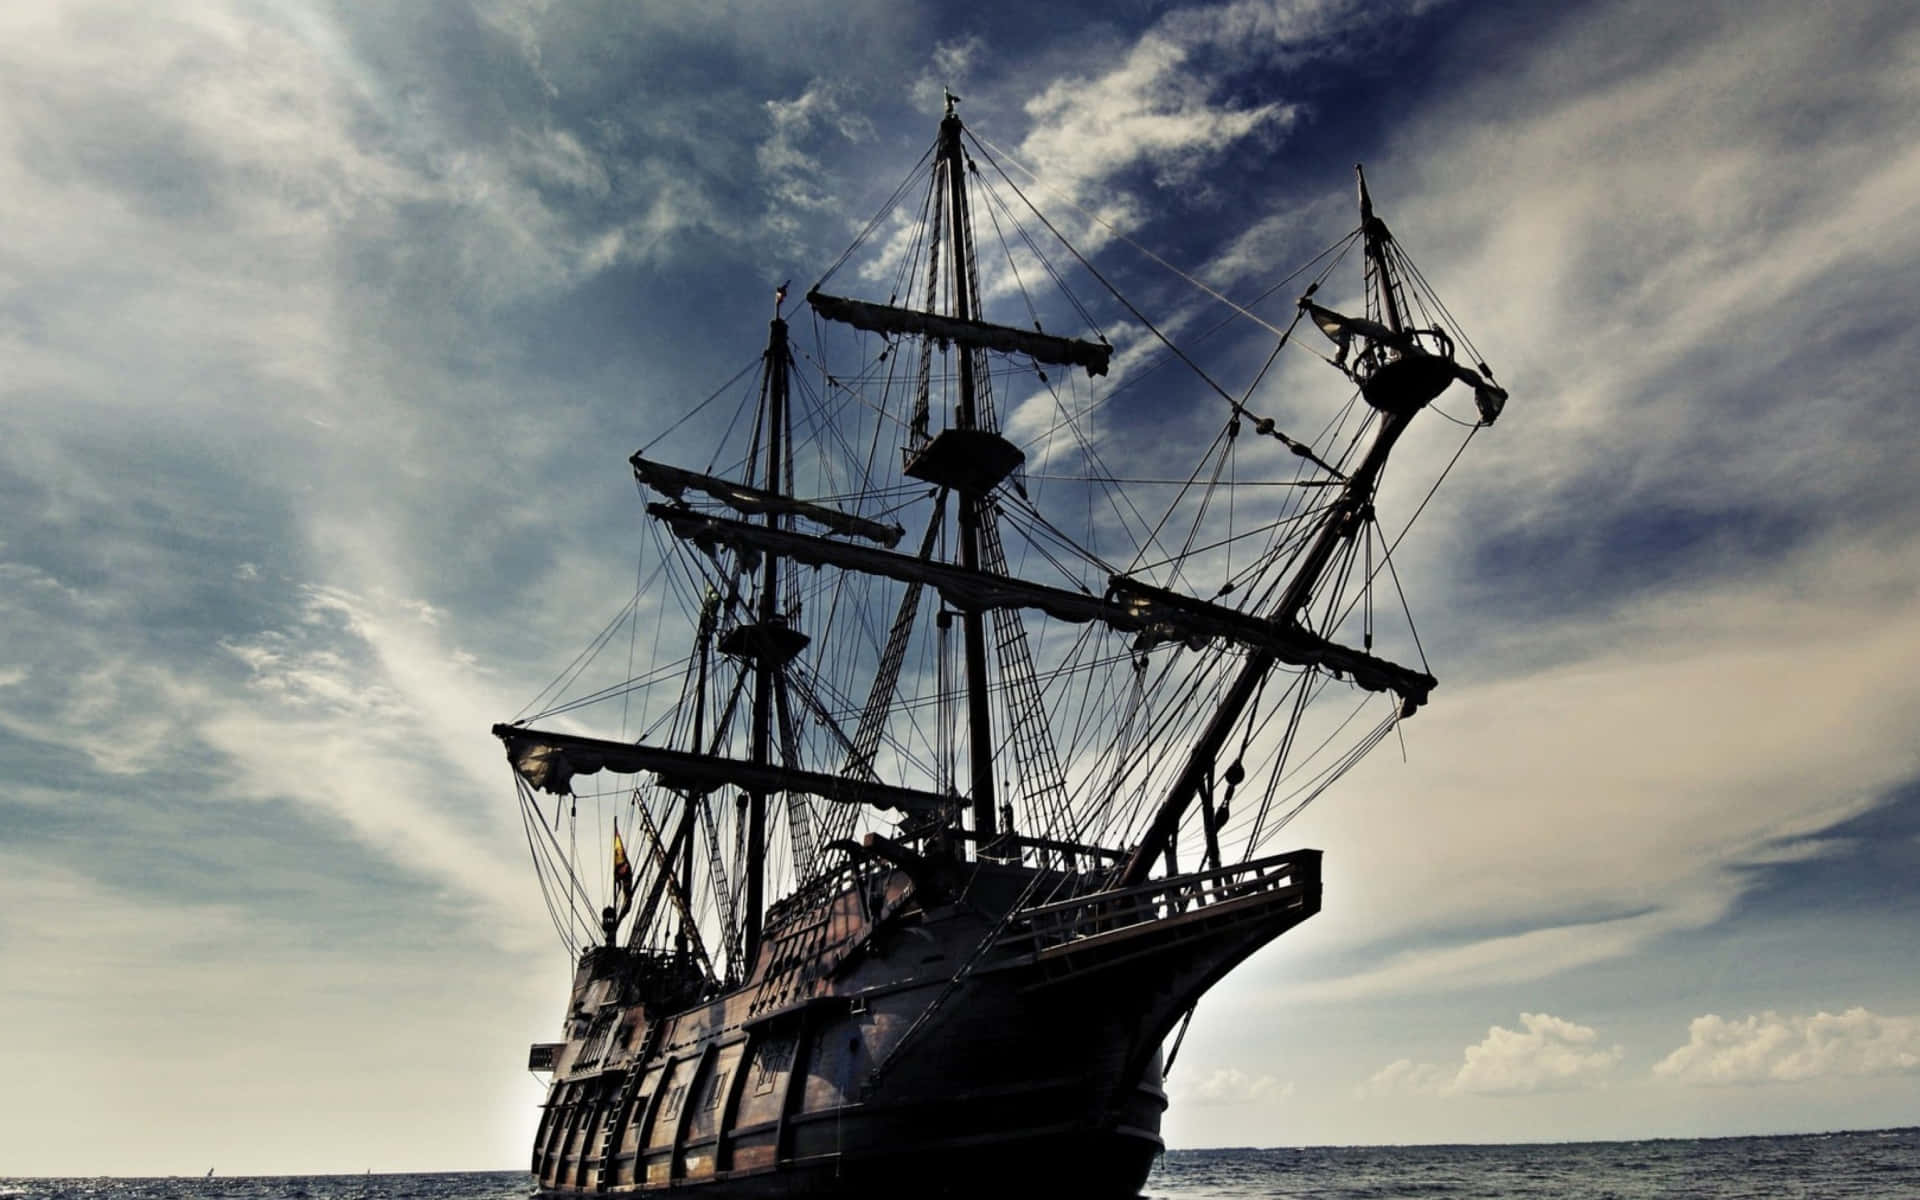 Captain Jack Sparrow and the Black Pearl sailing the Caribbean seas